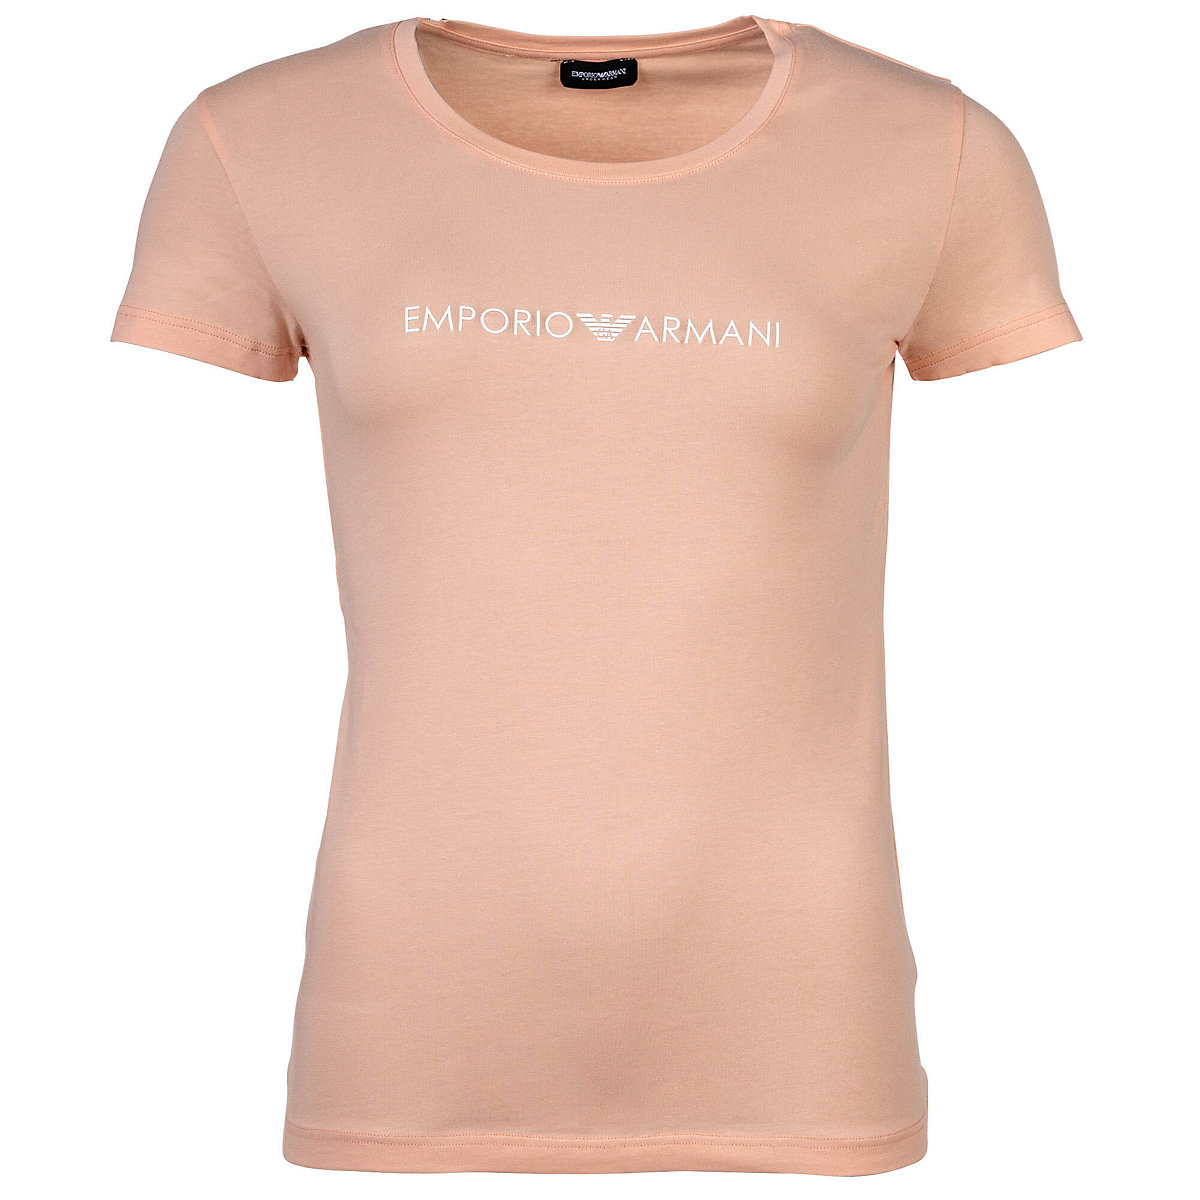 Emporio Armani Damen T-Shirt Rundhals Kurzarm Loungewear Stretch Cotton T-Shirts apricot